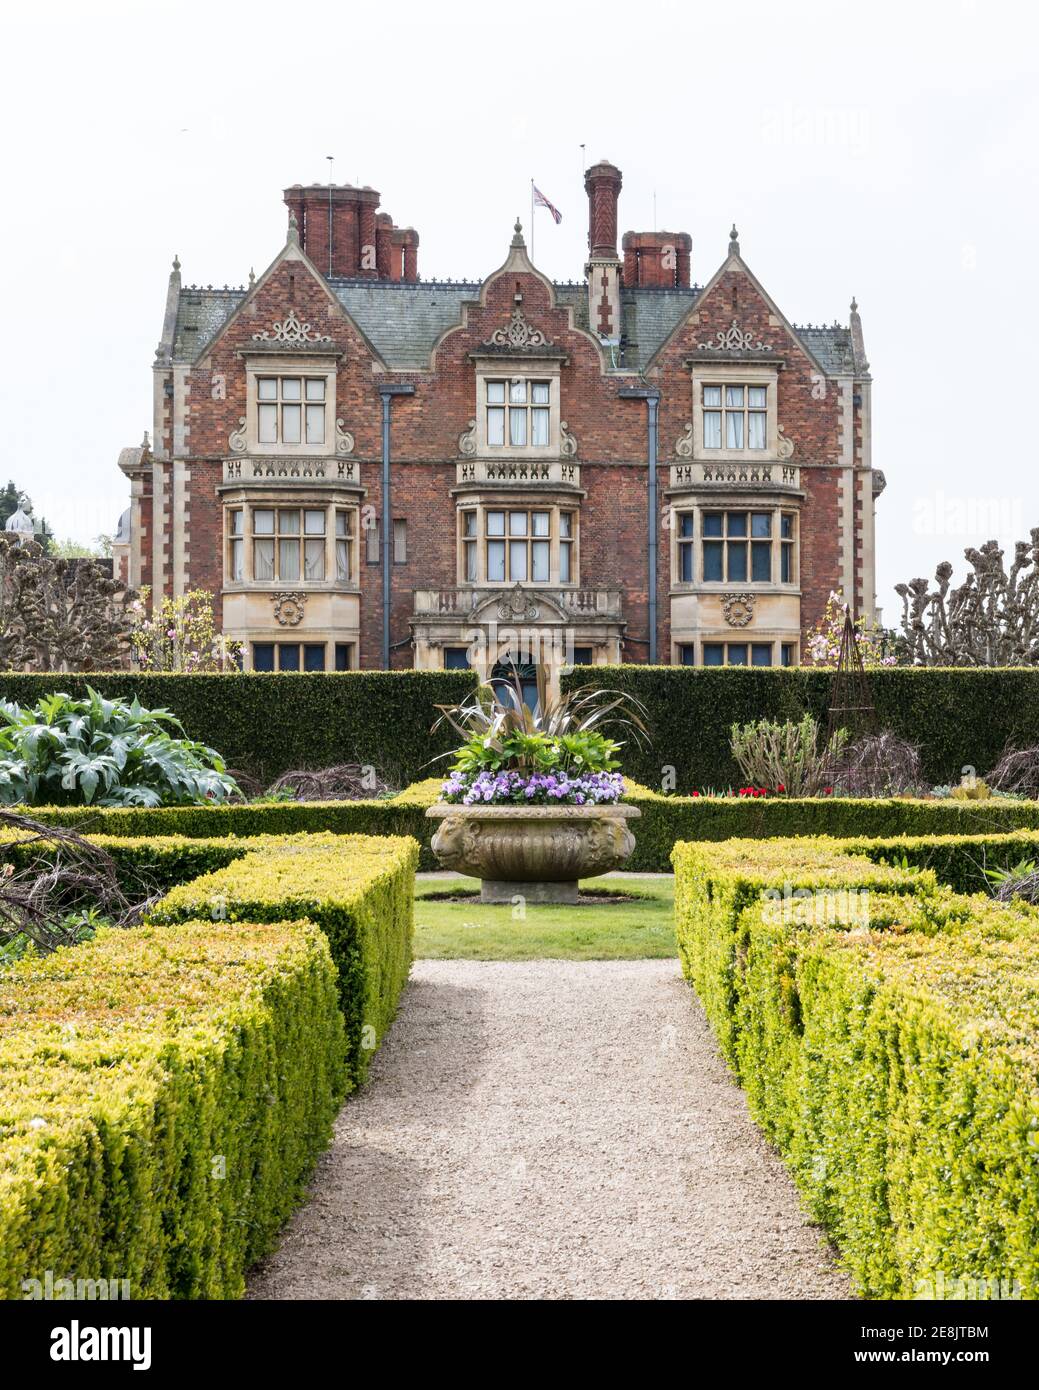 UK, Norfolk, Sandringham Estate, 2019, April, 23: North Elevation dettaglio della casa e del giardino, Sandringham House, la residenza della regina Elisabetta II Foto Stock